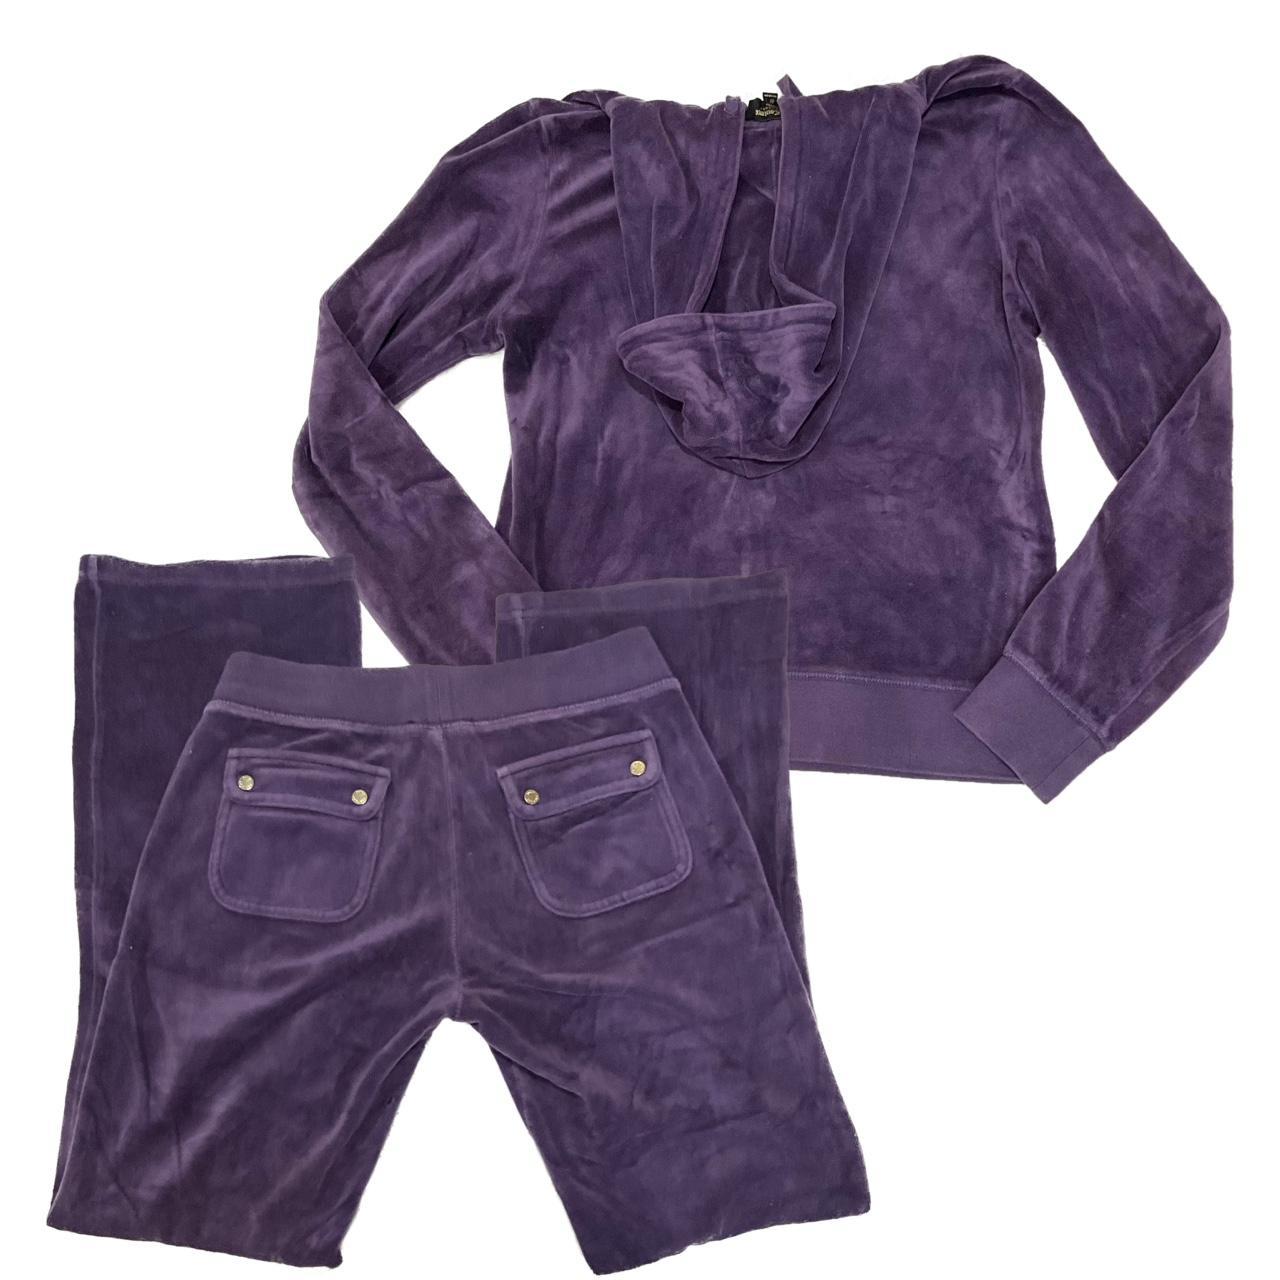 Juicy Couture lavender tracksuit! Purple - $100 (60% Off Retail